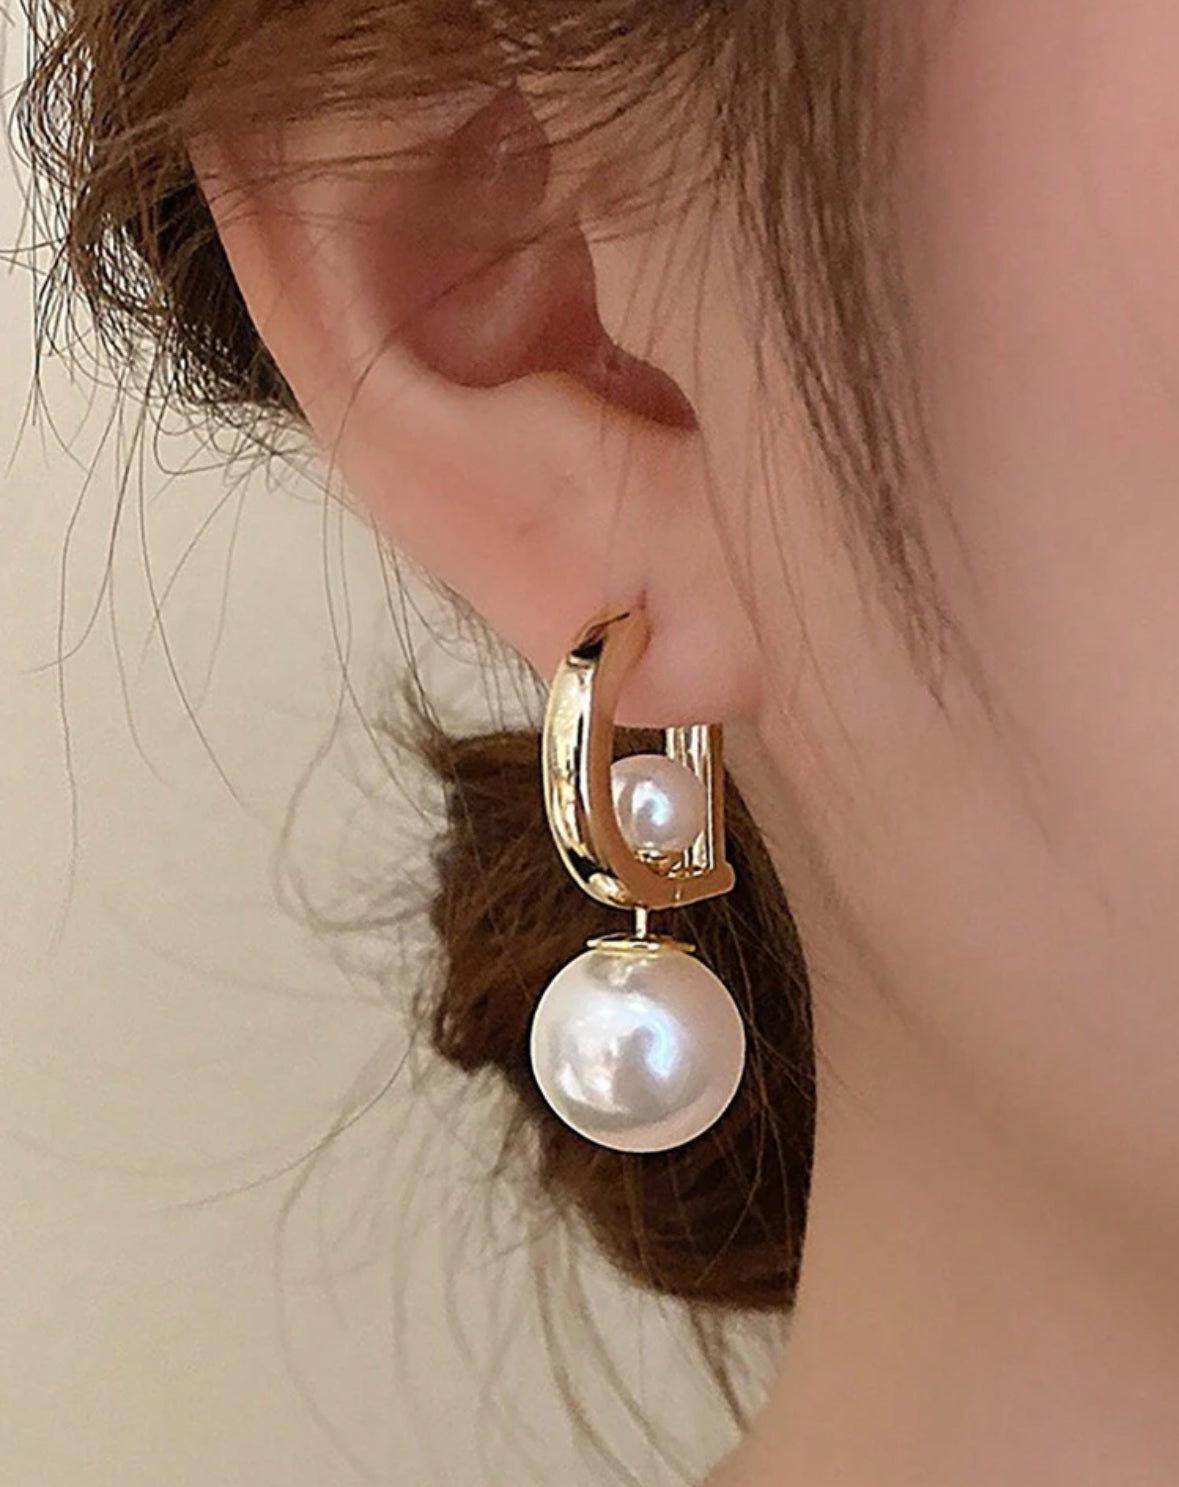 Initial Stud Earrings for Women Girls 14K Gold Plated Alphabet Letters Pearl Earrings.